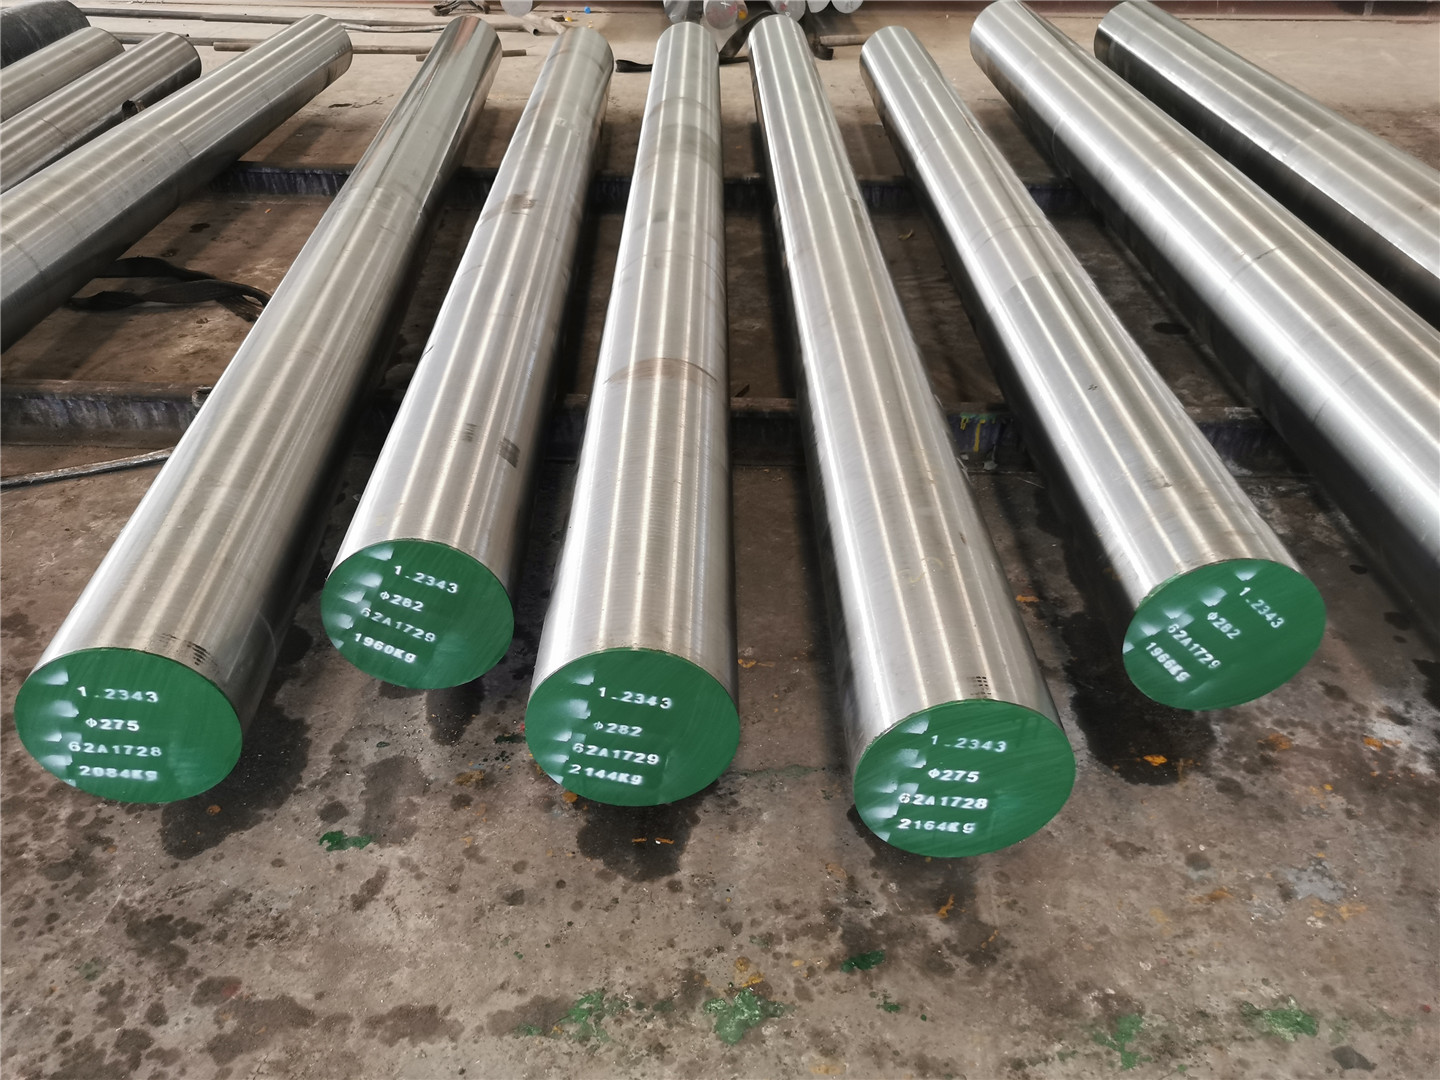 1.2343 round bars, 1.2343 EFS steel, 1.2343 forged round bars, 1.2343 steel composition, 1.2343 steel heat treatment